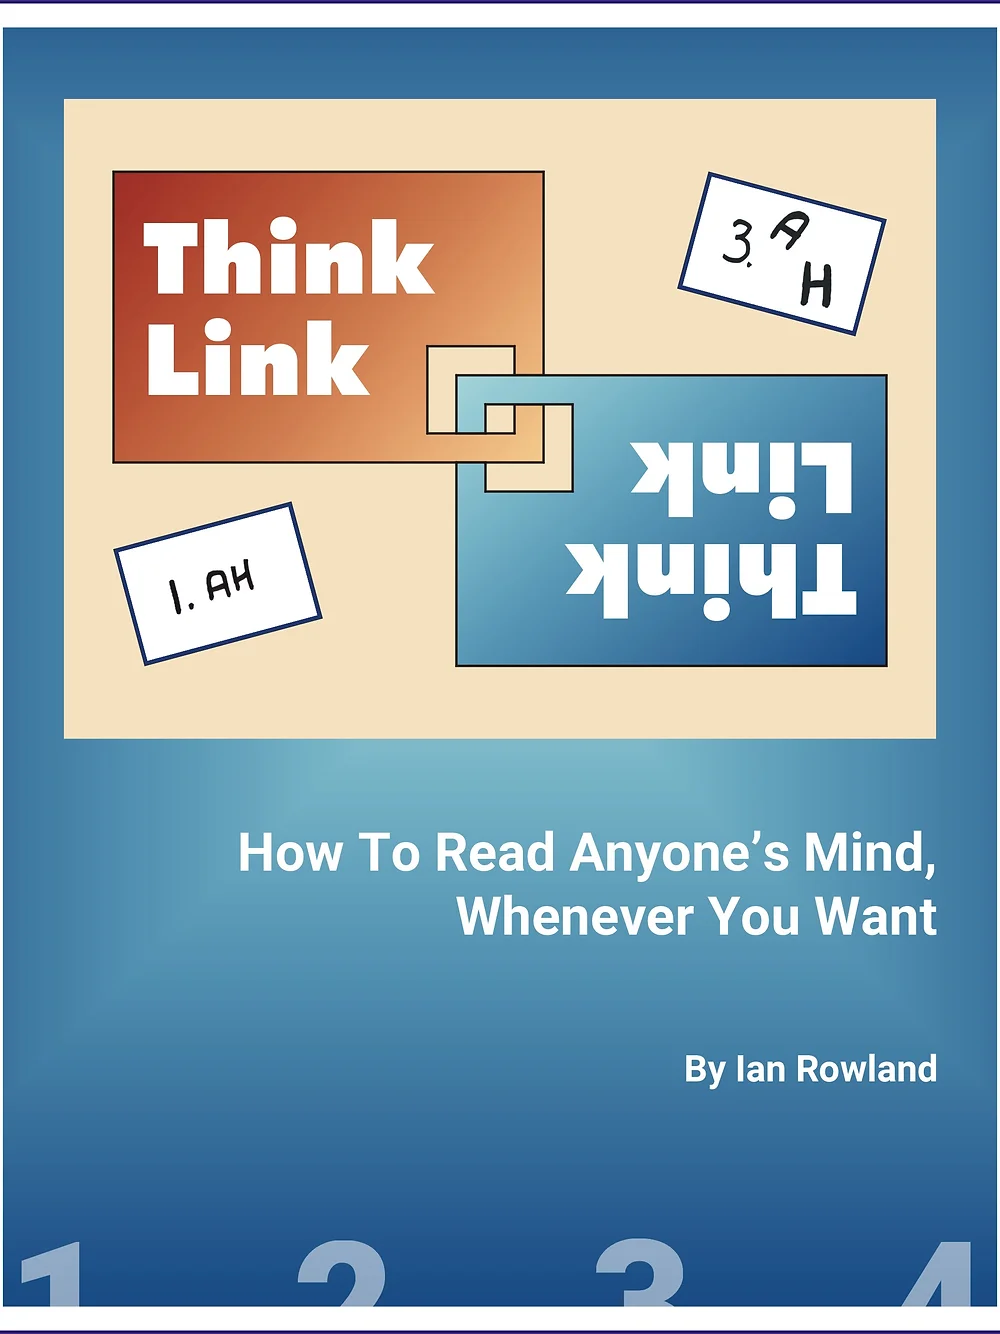 Ian Rowland - Think Link